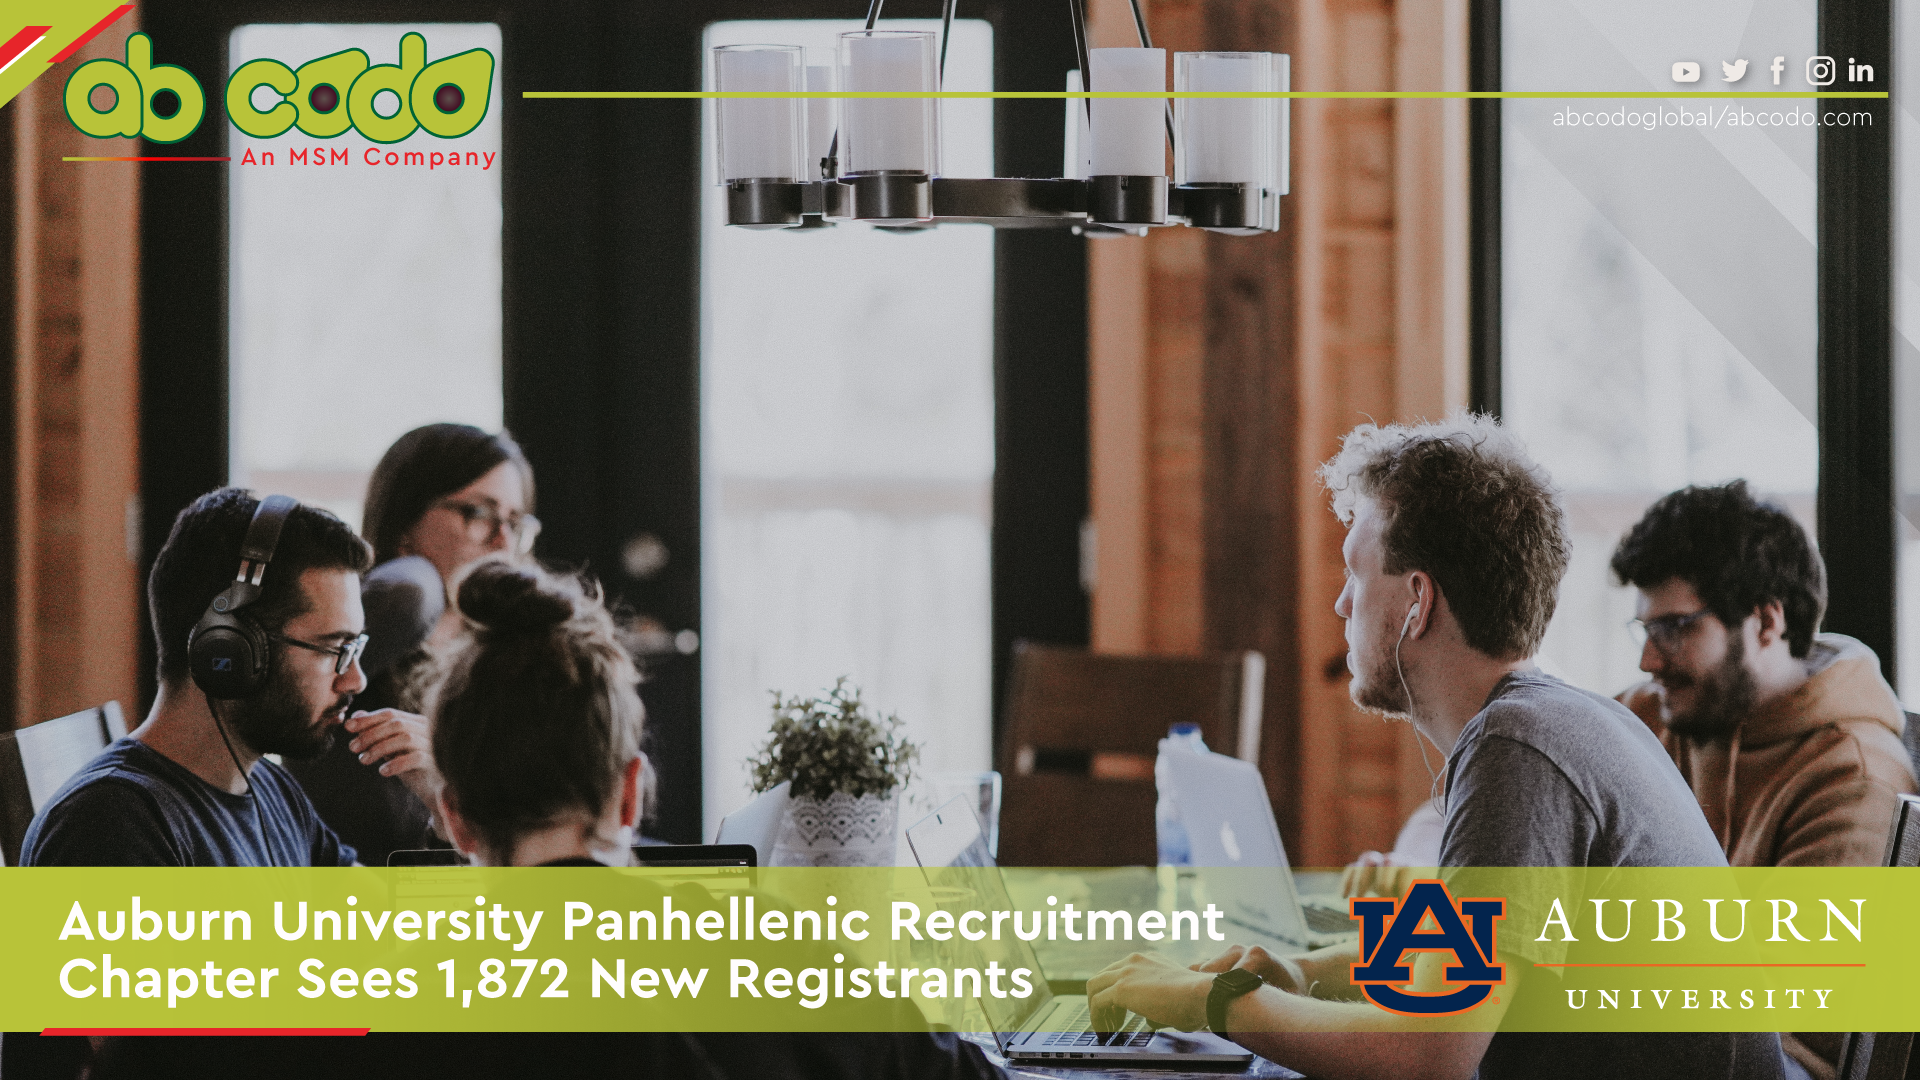 Auburn University Panhellenic Recruitment Chapter Sees 1,872 New Registrants